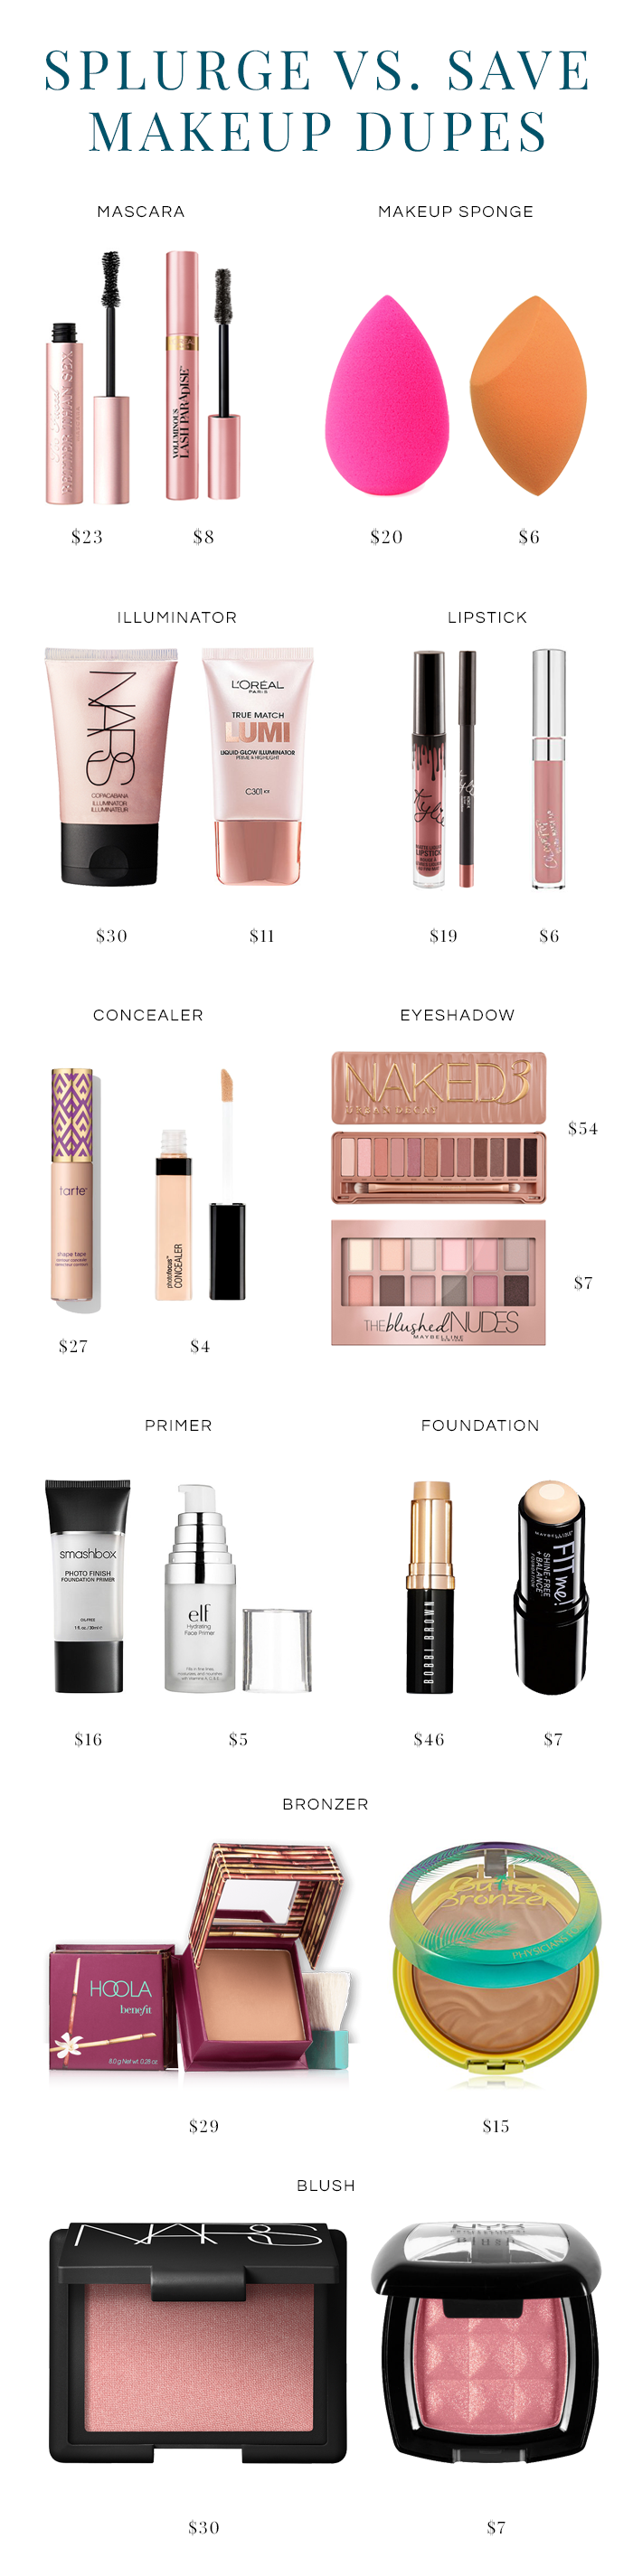 Splurge or Save? Top 10 Best Makeup Dupes - The Beauty Minimalist